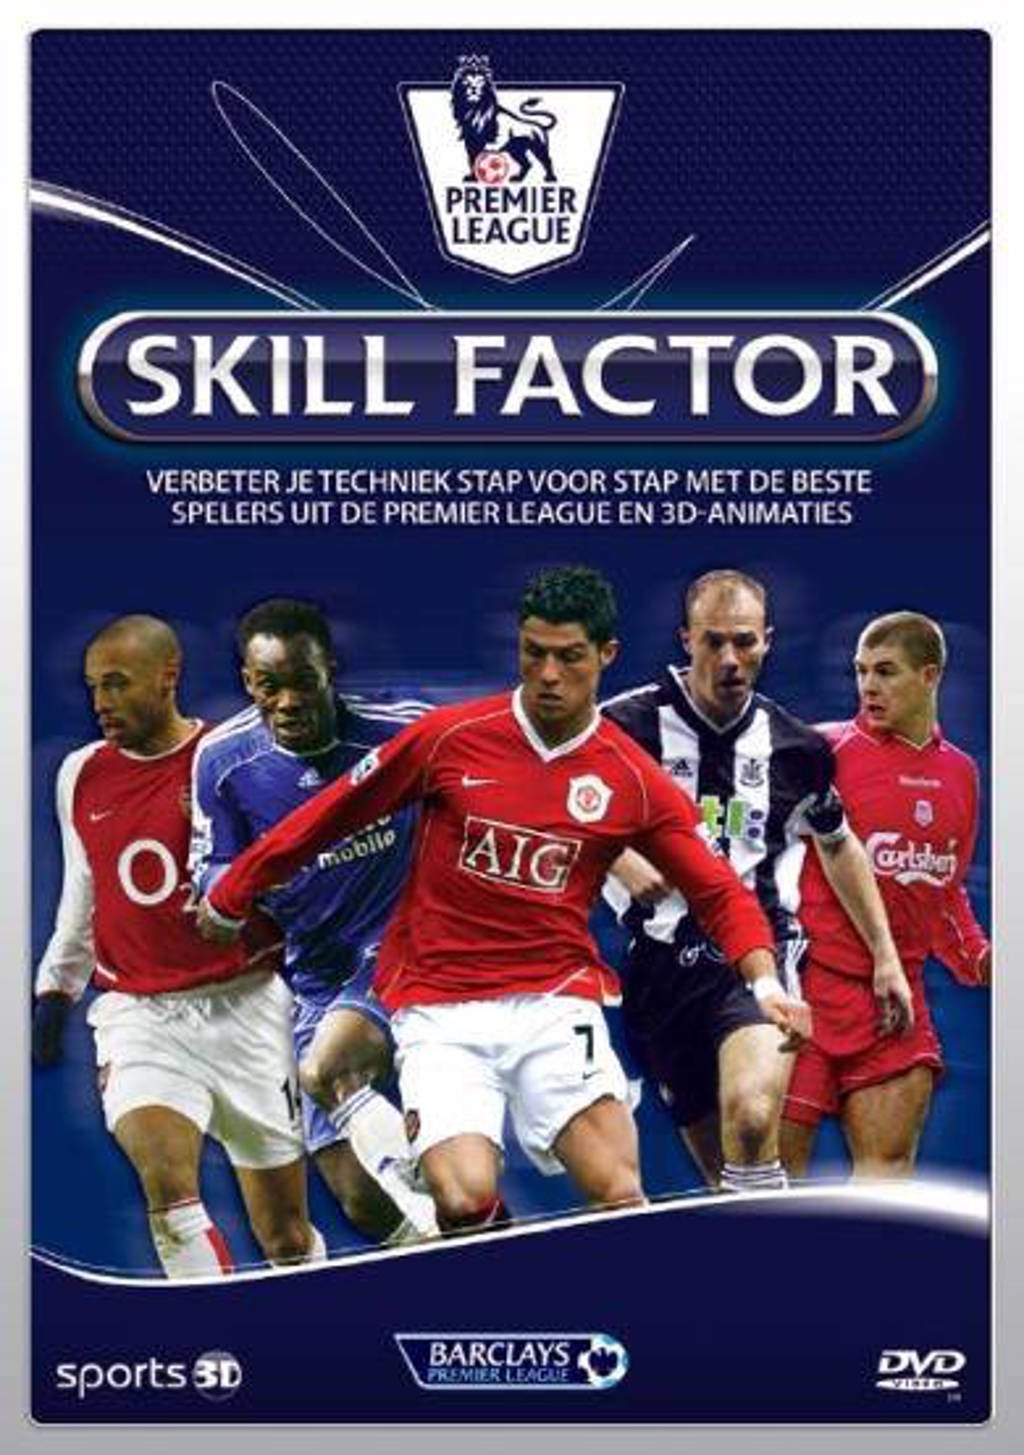 Premier League - Skill Factor (DVD)